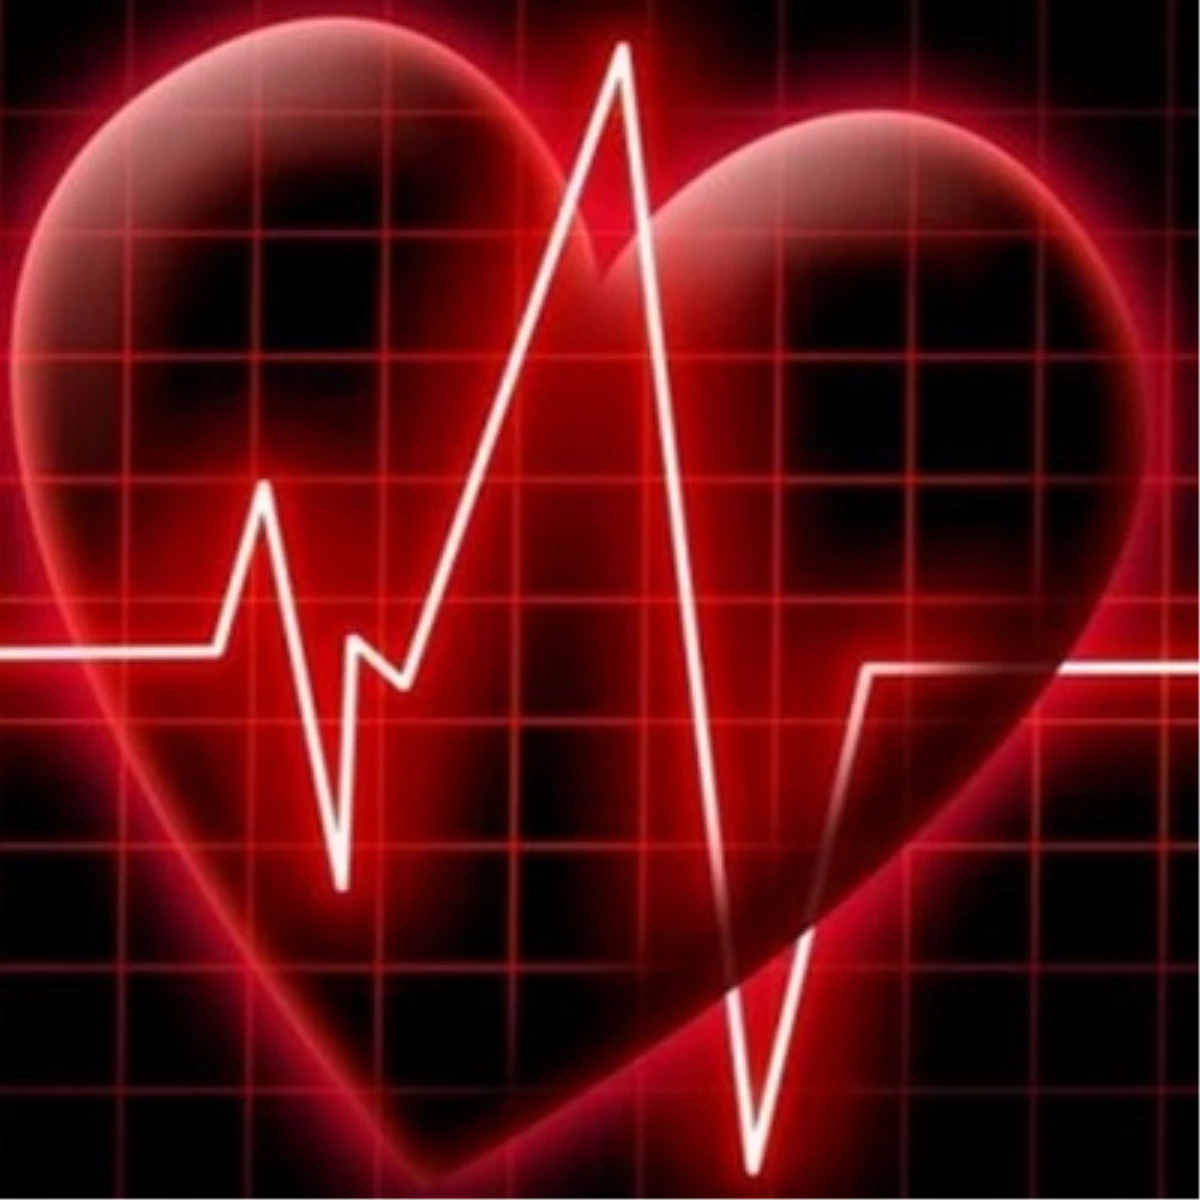 Turhal Kaymakamı Kalp Krizi Geçirdi